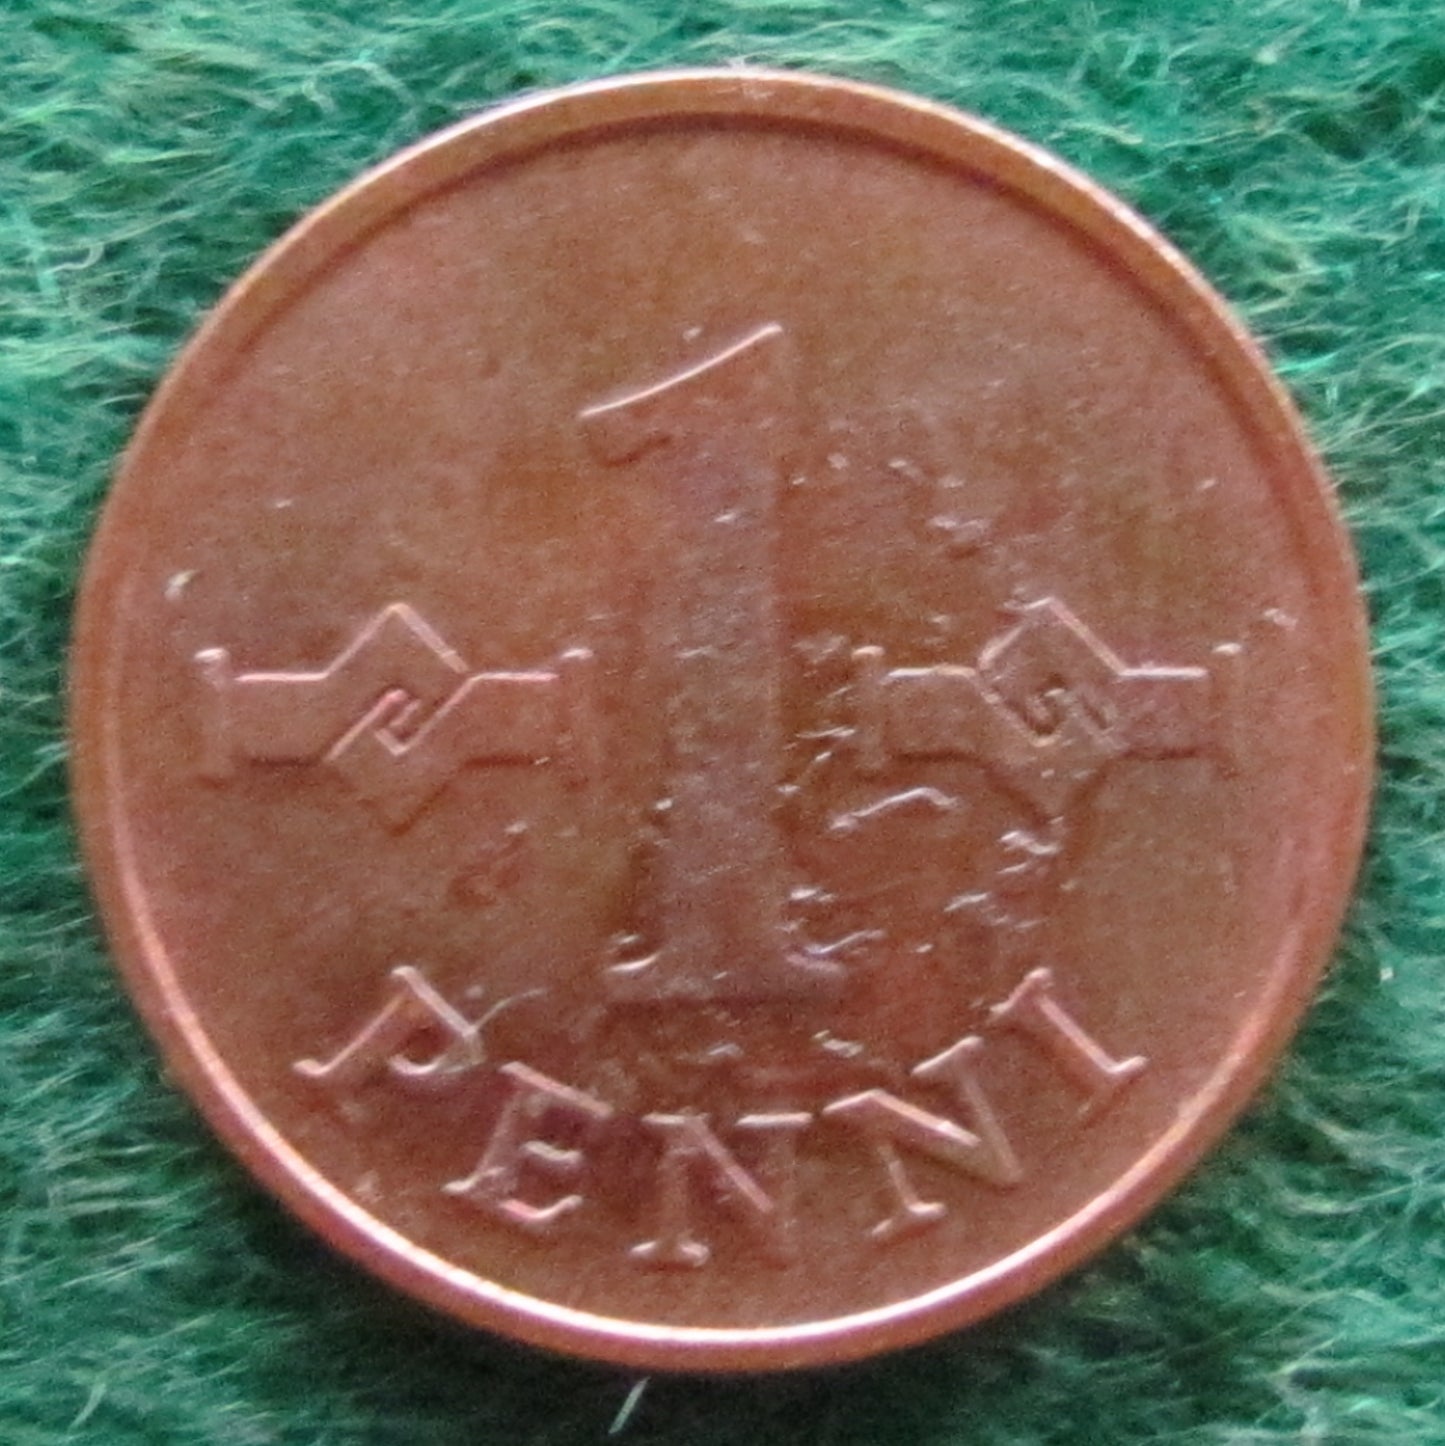 Suomen Tasavalta Finland 1965 1 Penni Coin - Circulated